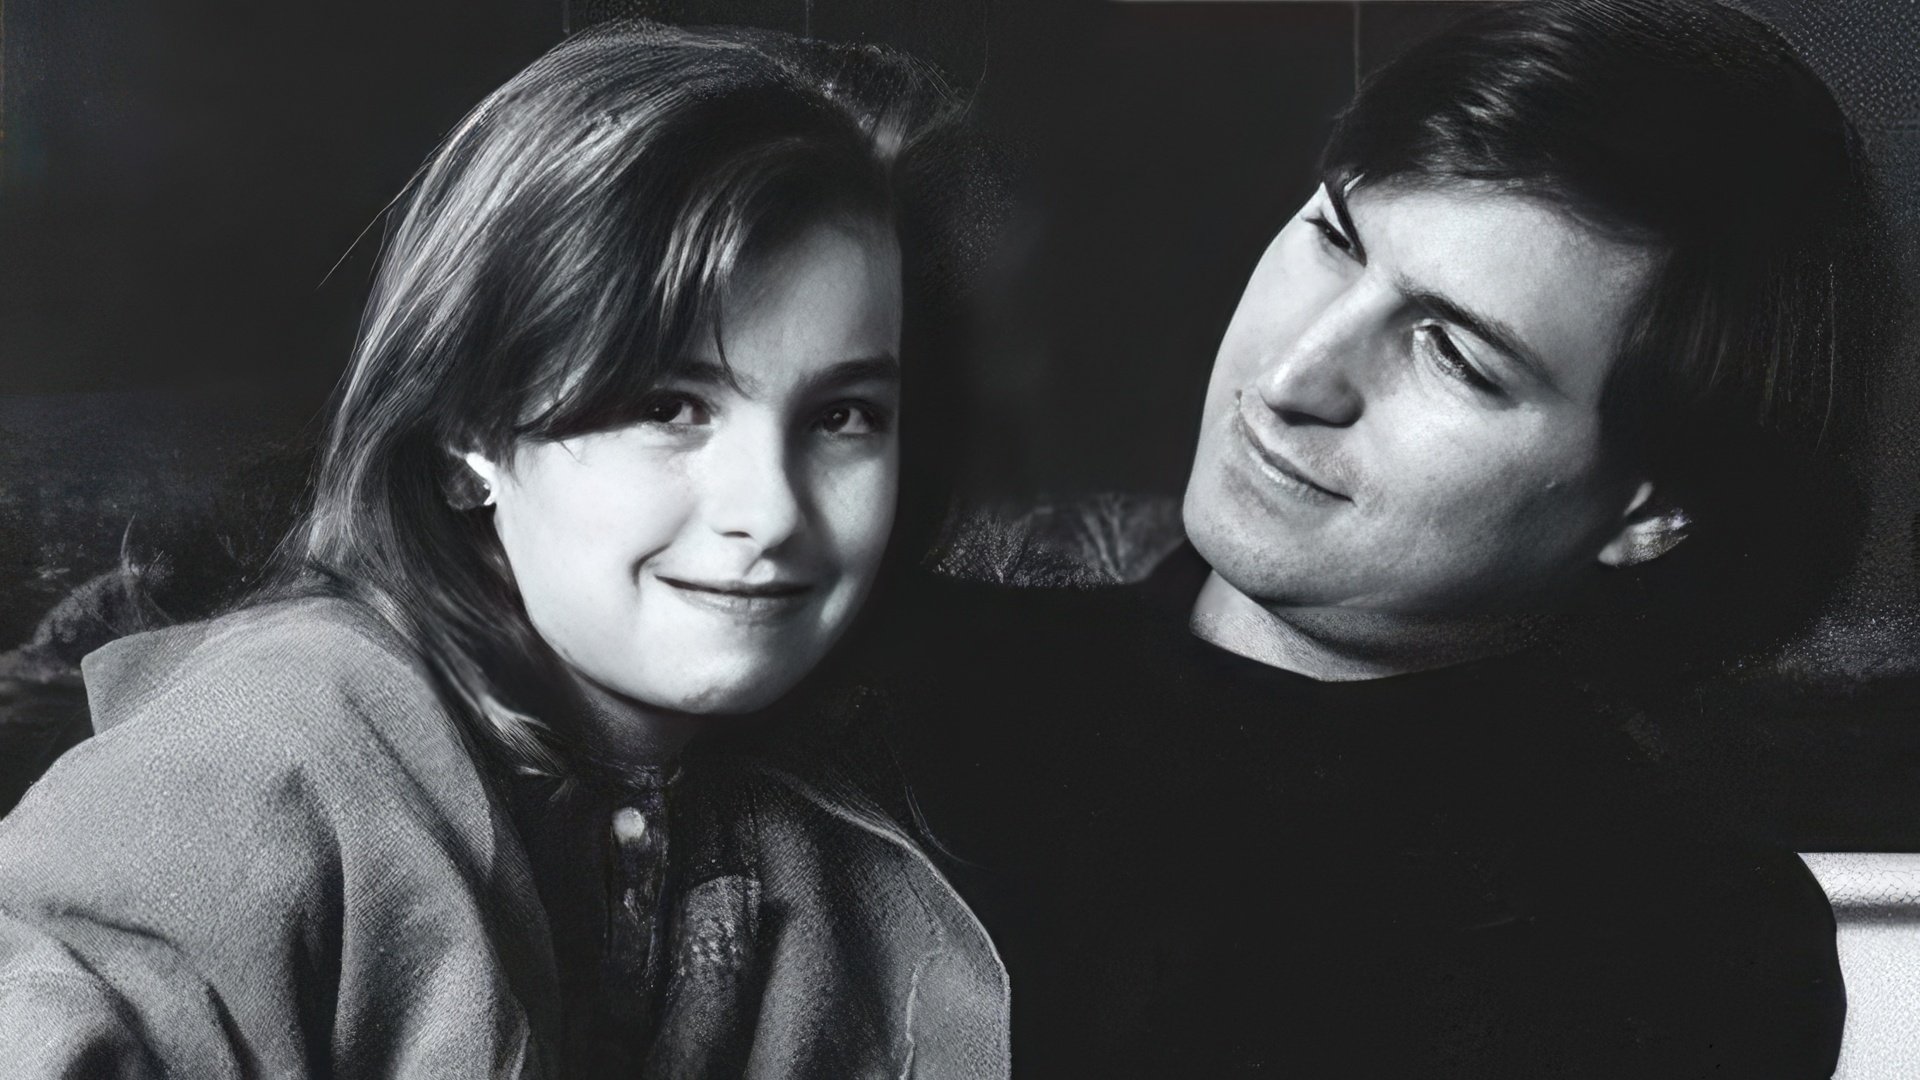 Steve Jobs and his daughter Lisa